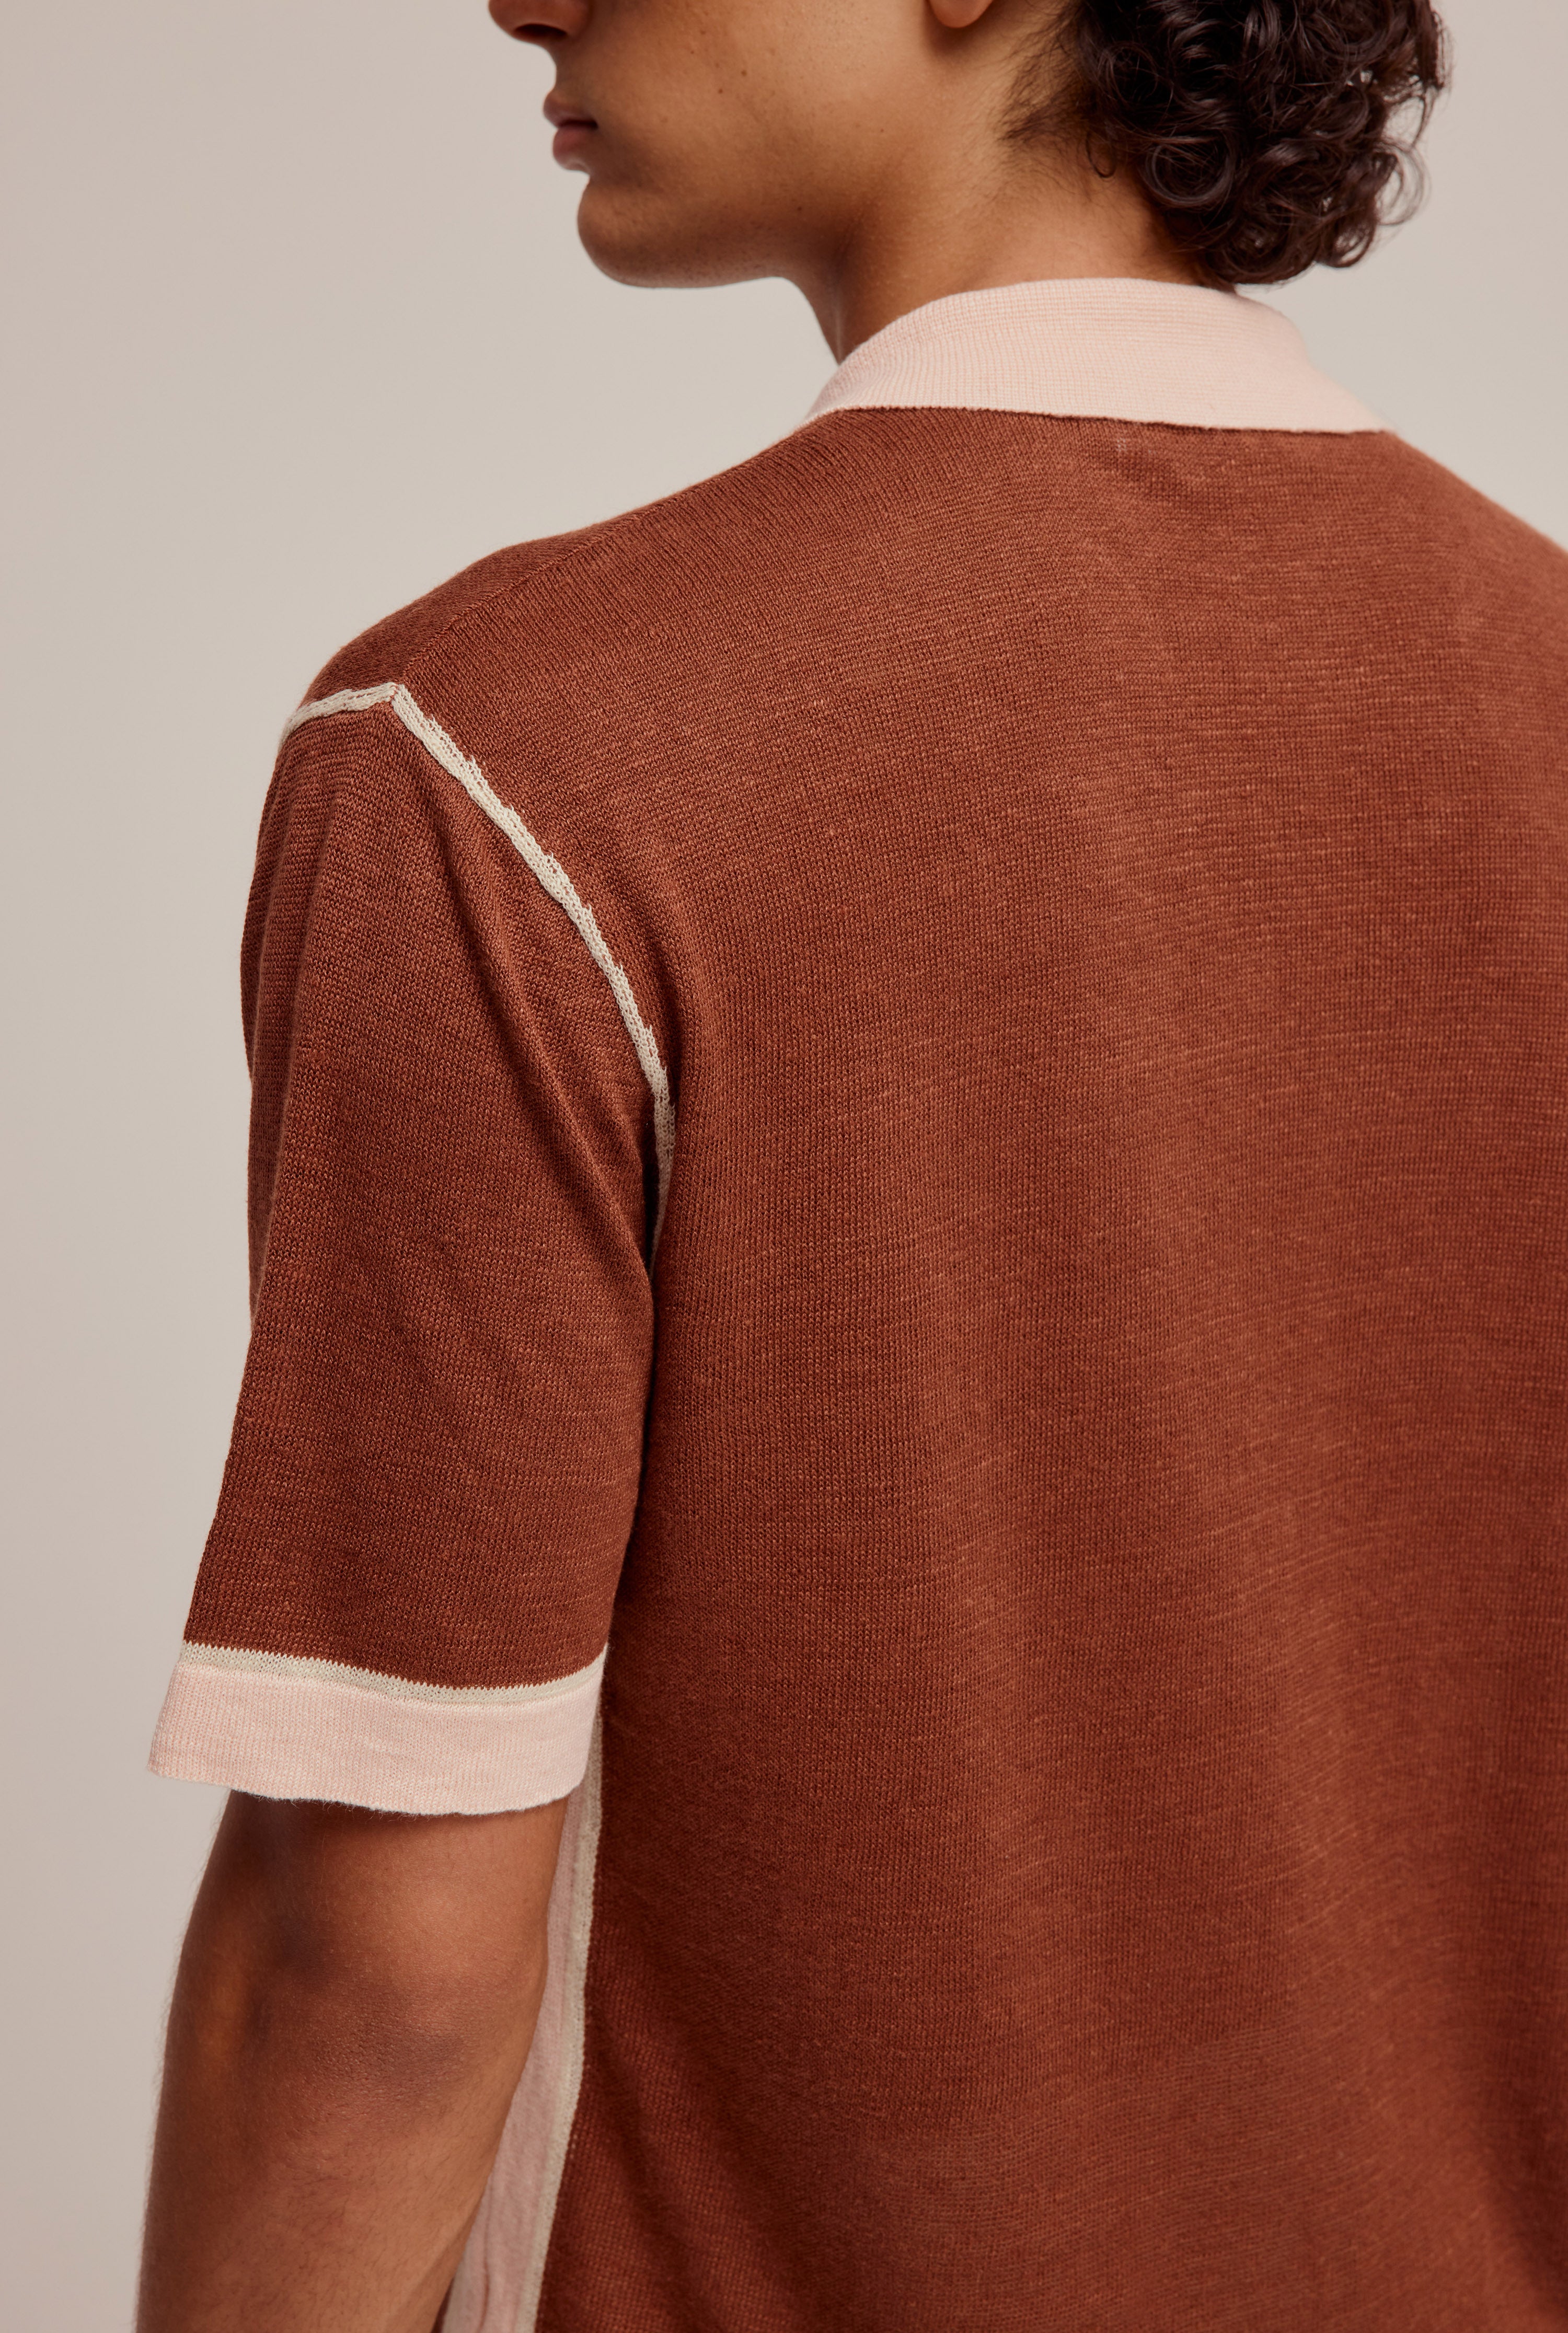 Knitted Contrast Short Sleeve Shirt - Chestnut/Peach Whip/Cream